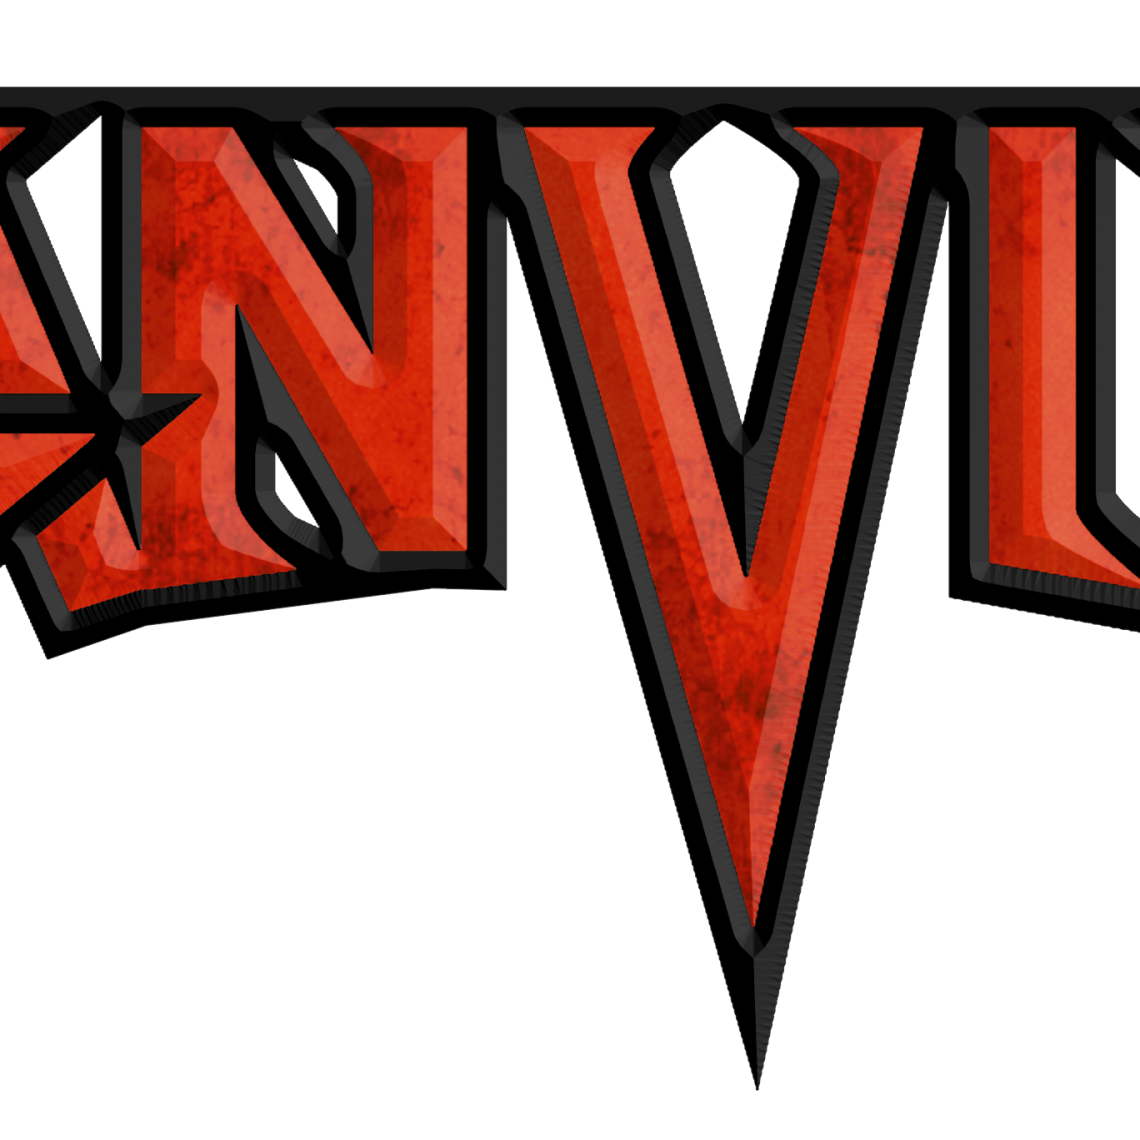 Anvil: Legal at Last